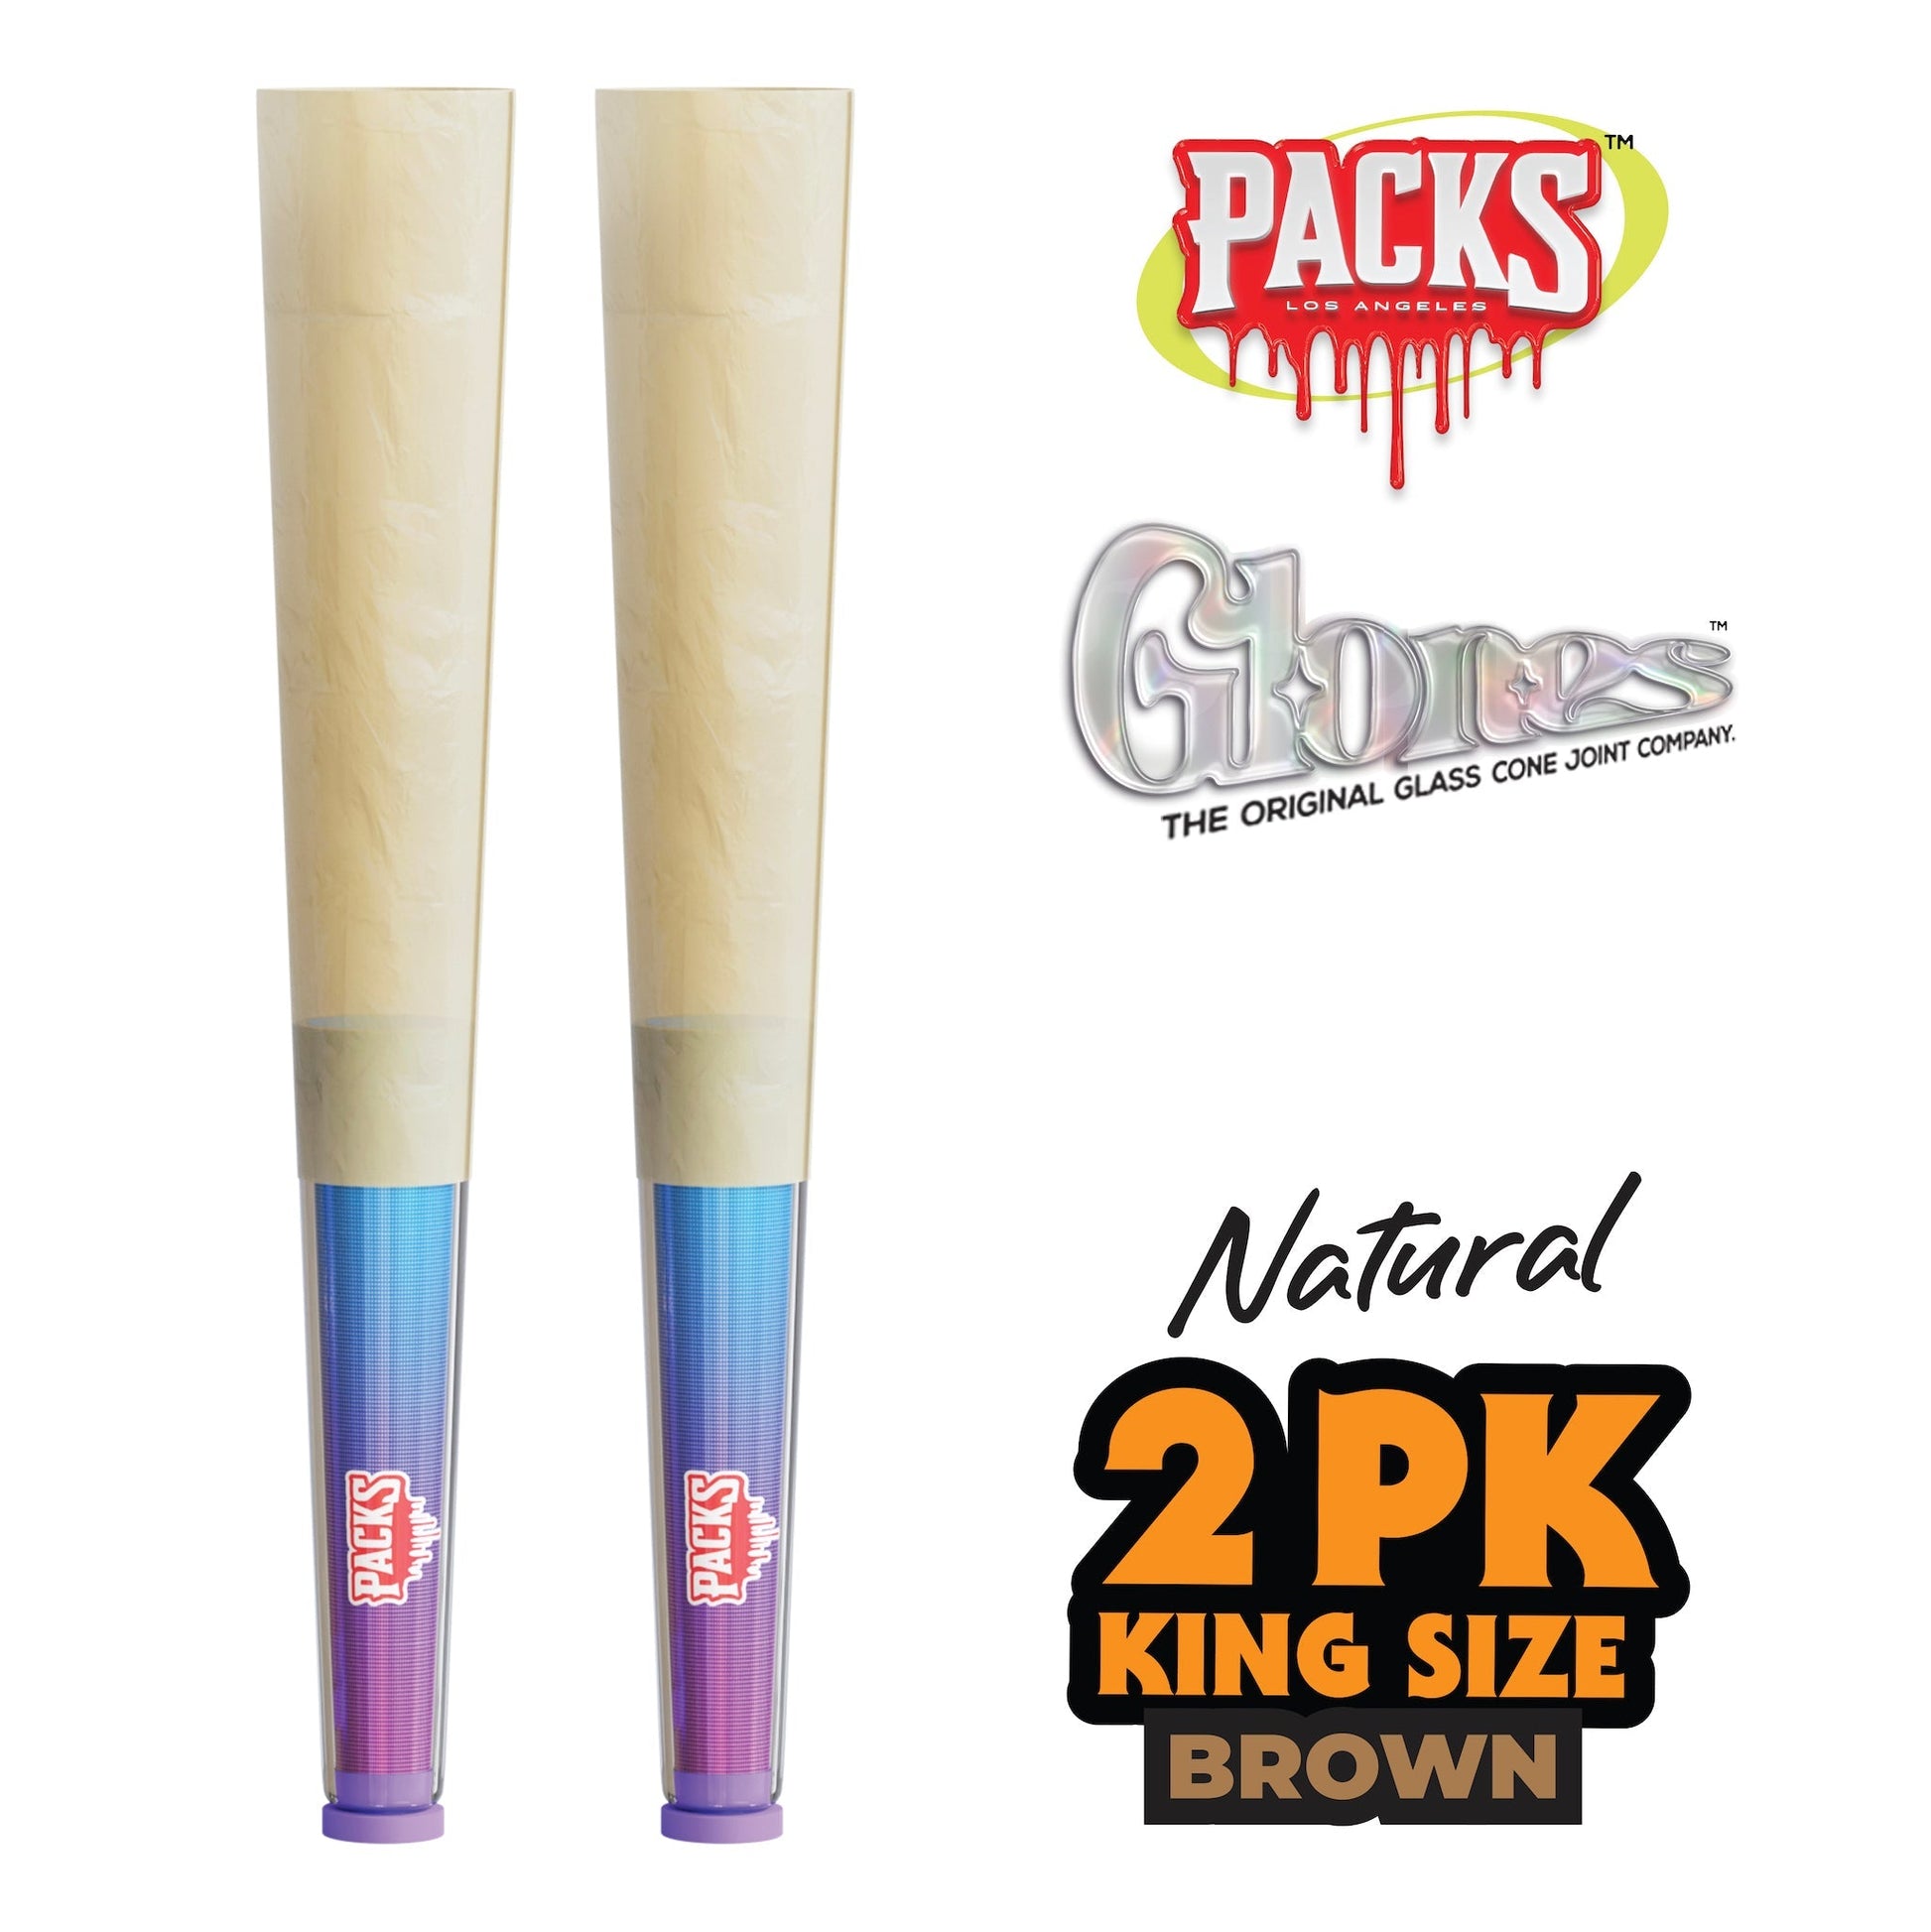 Packwoods Glones King Size Brown